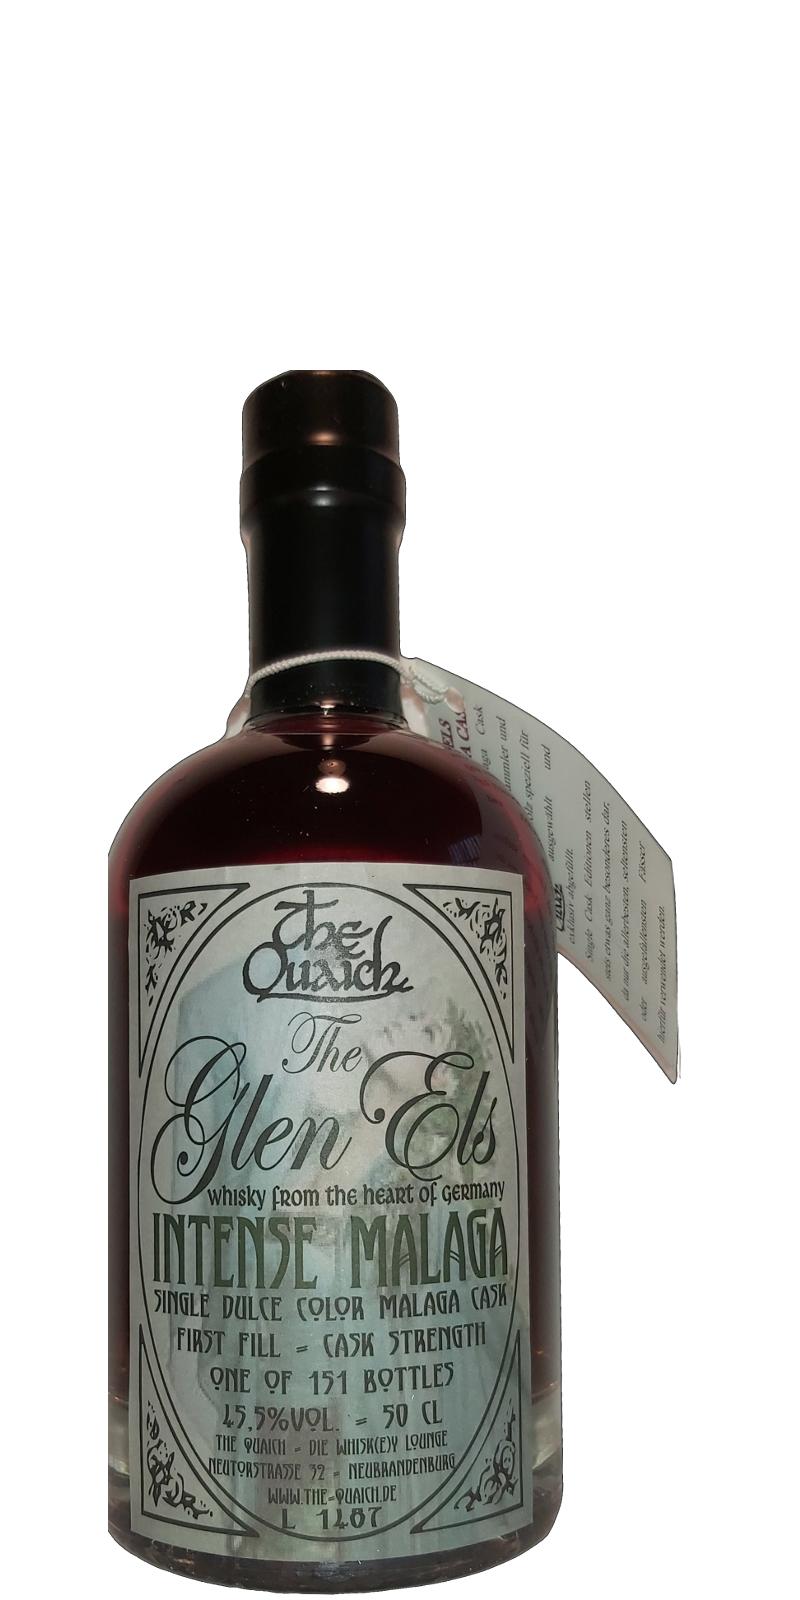 Glen Els Intense Malaga Single Dulce Color Malaga The Quaich 45.5% 500ml